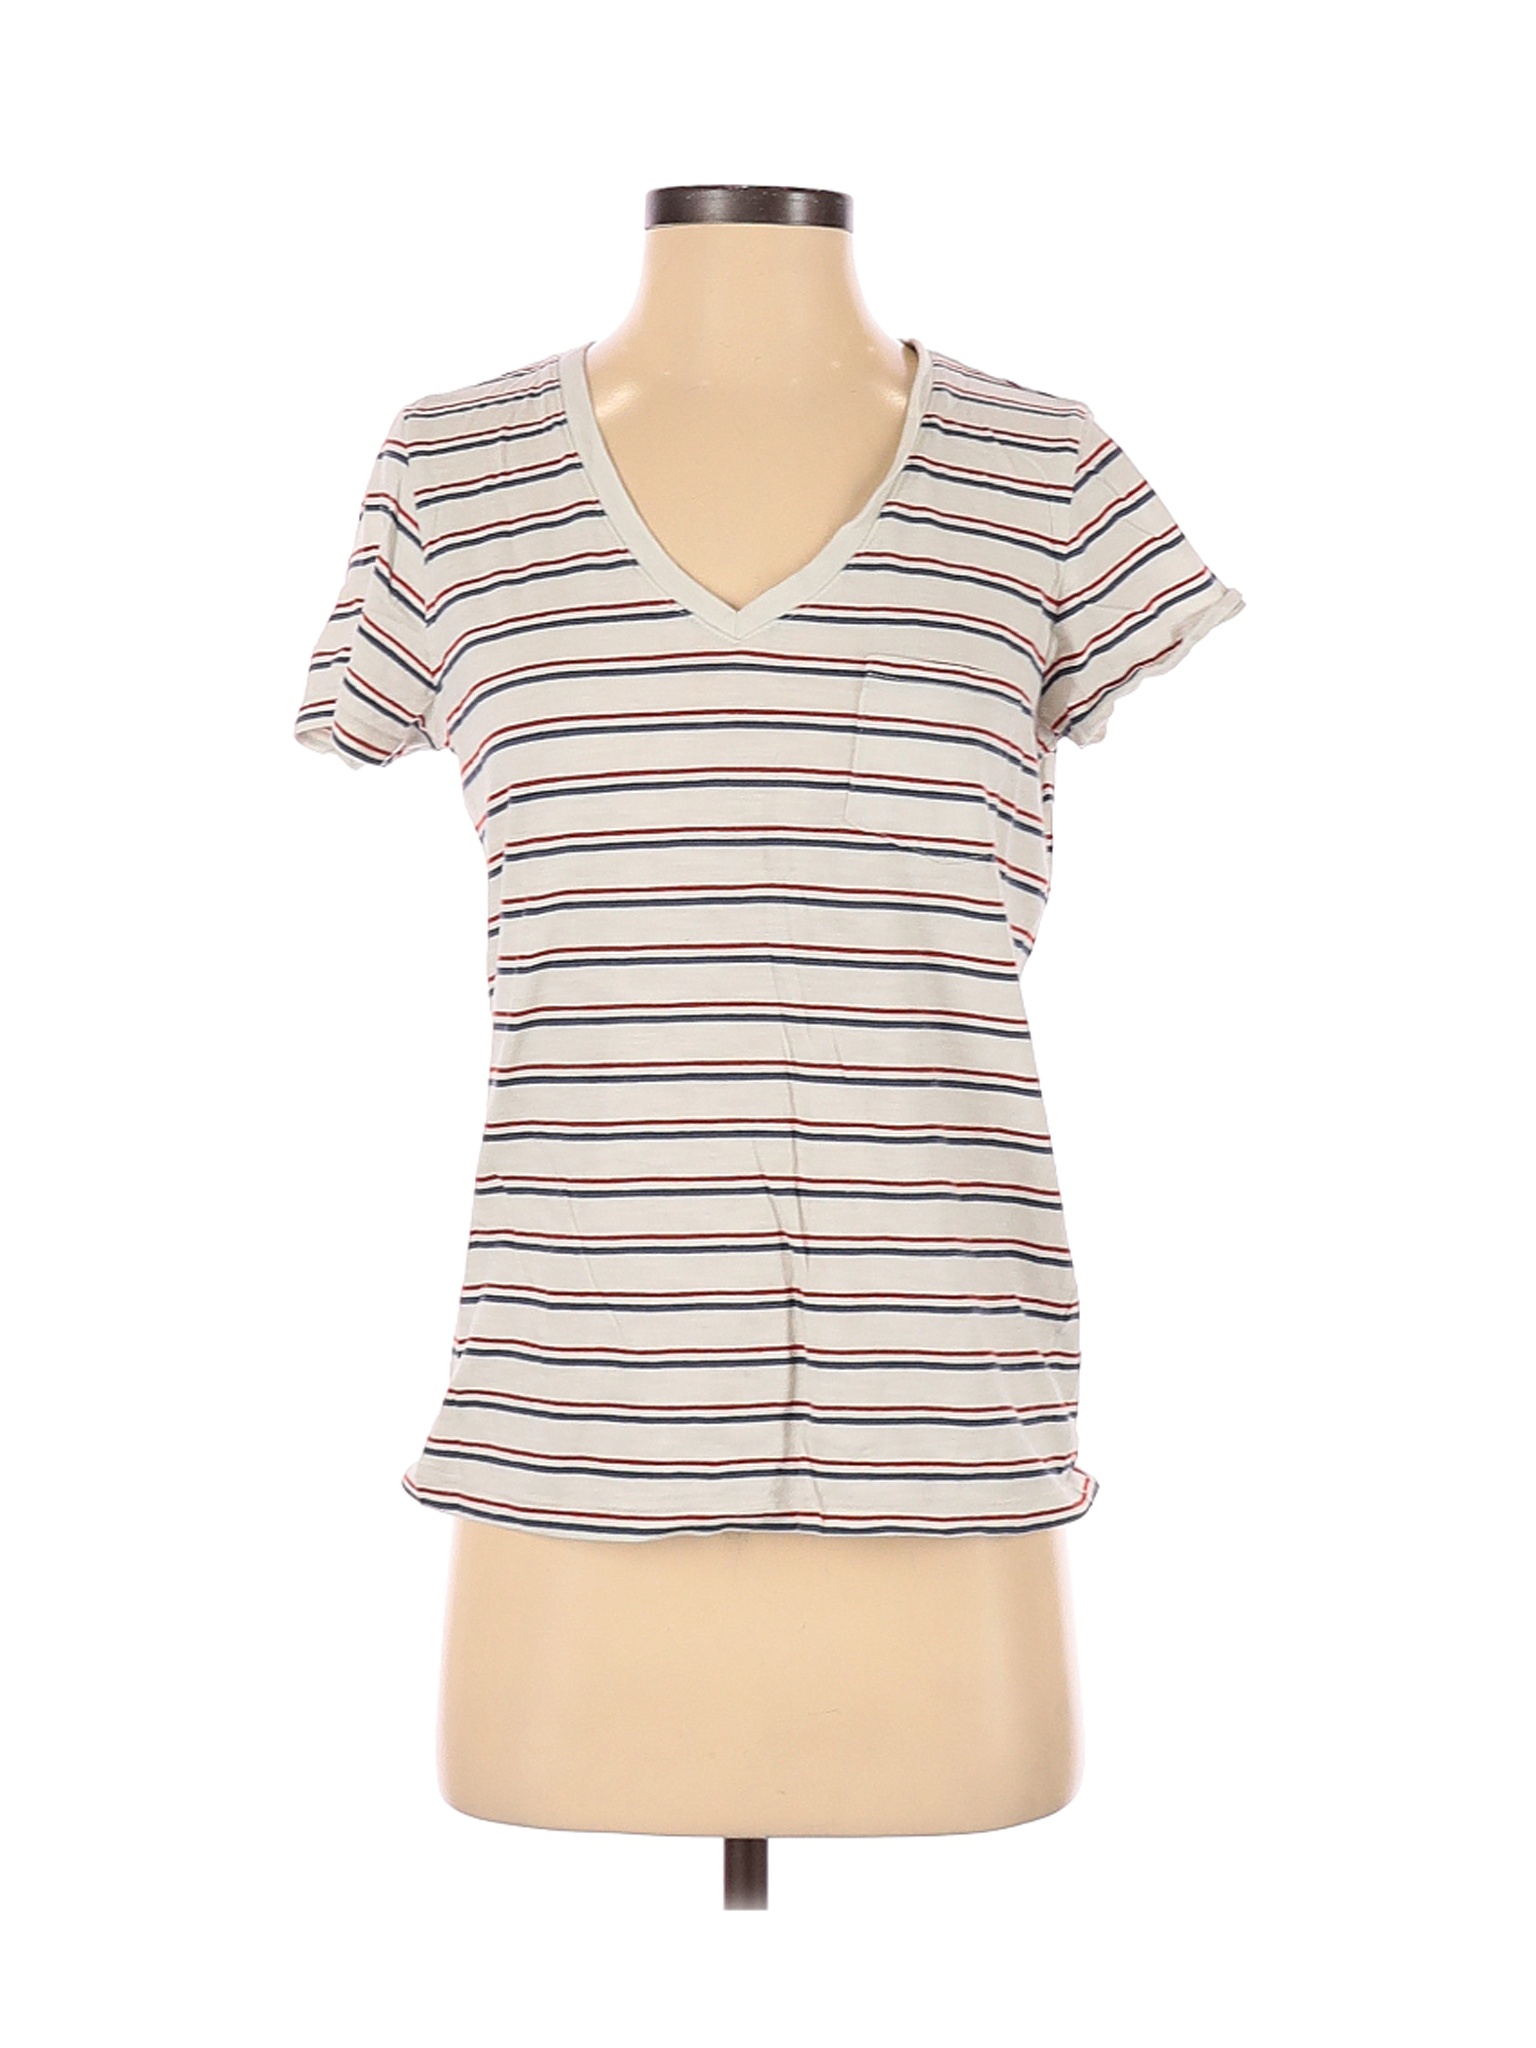 Universal Thread Women White Short Sleeve T-Shirt XS | eBay